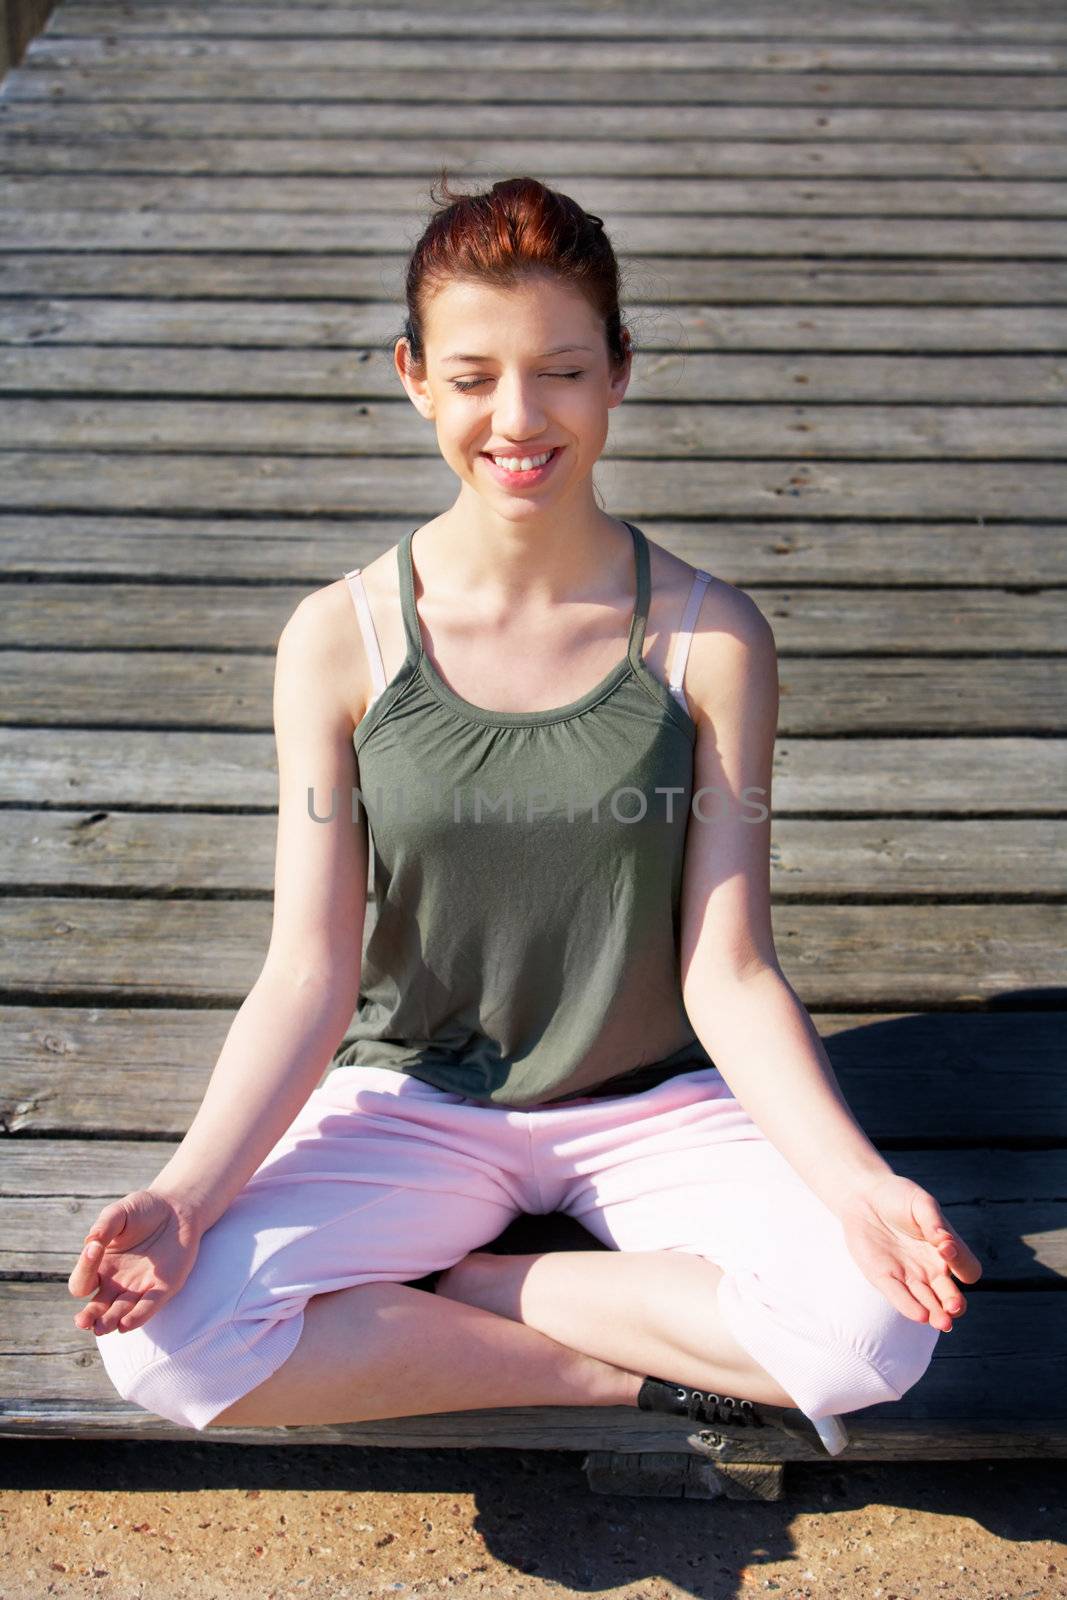 Teenage girl meditating on pier outdoors, smiling